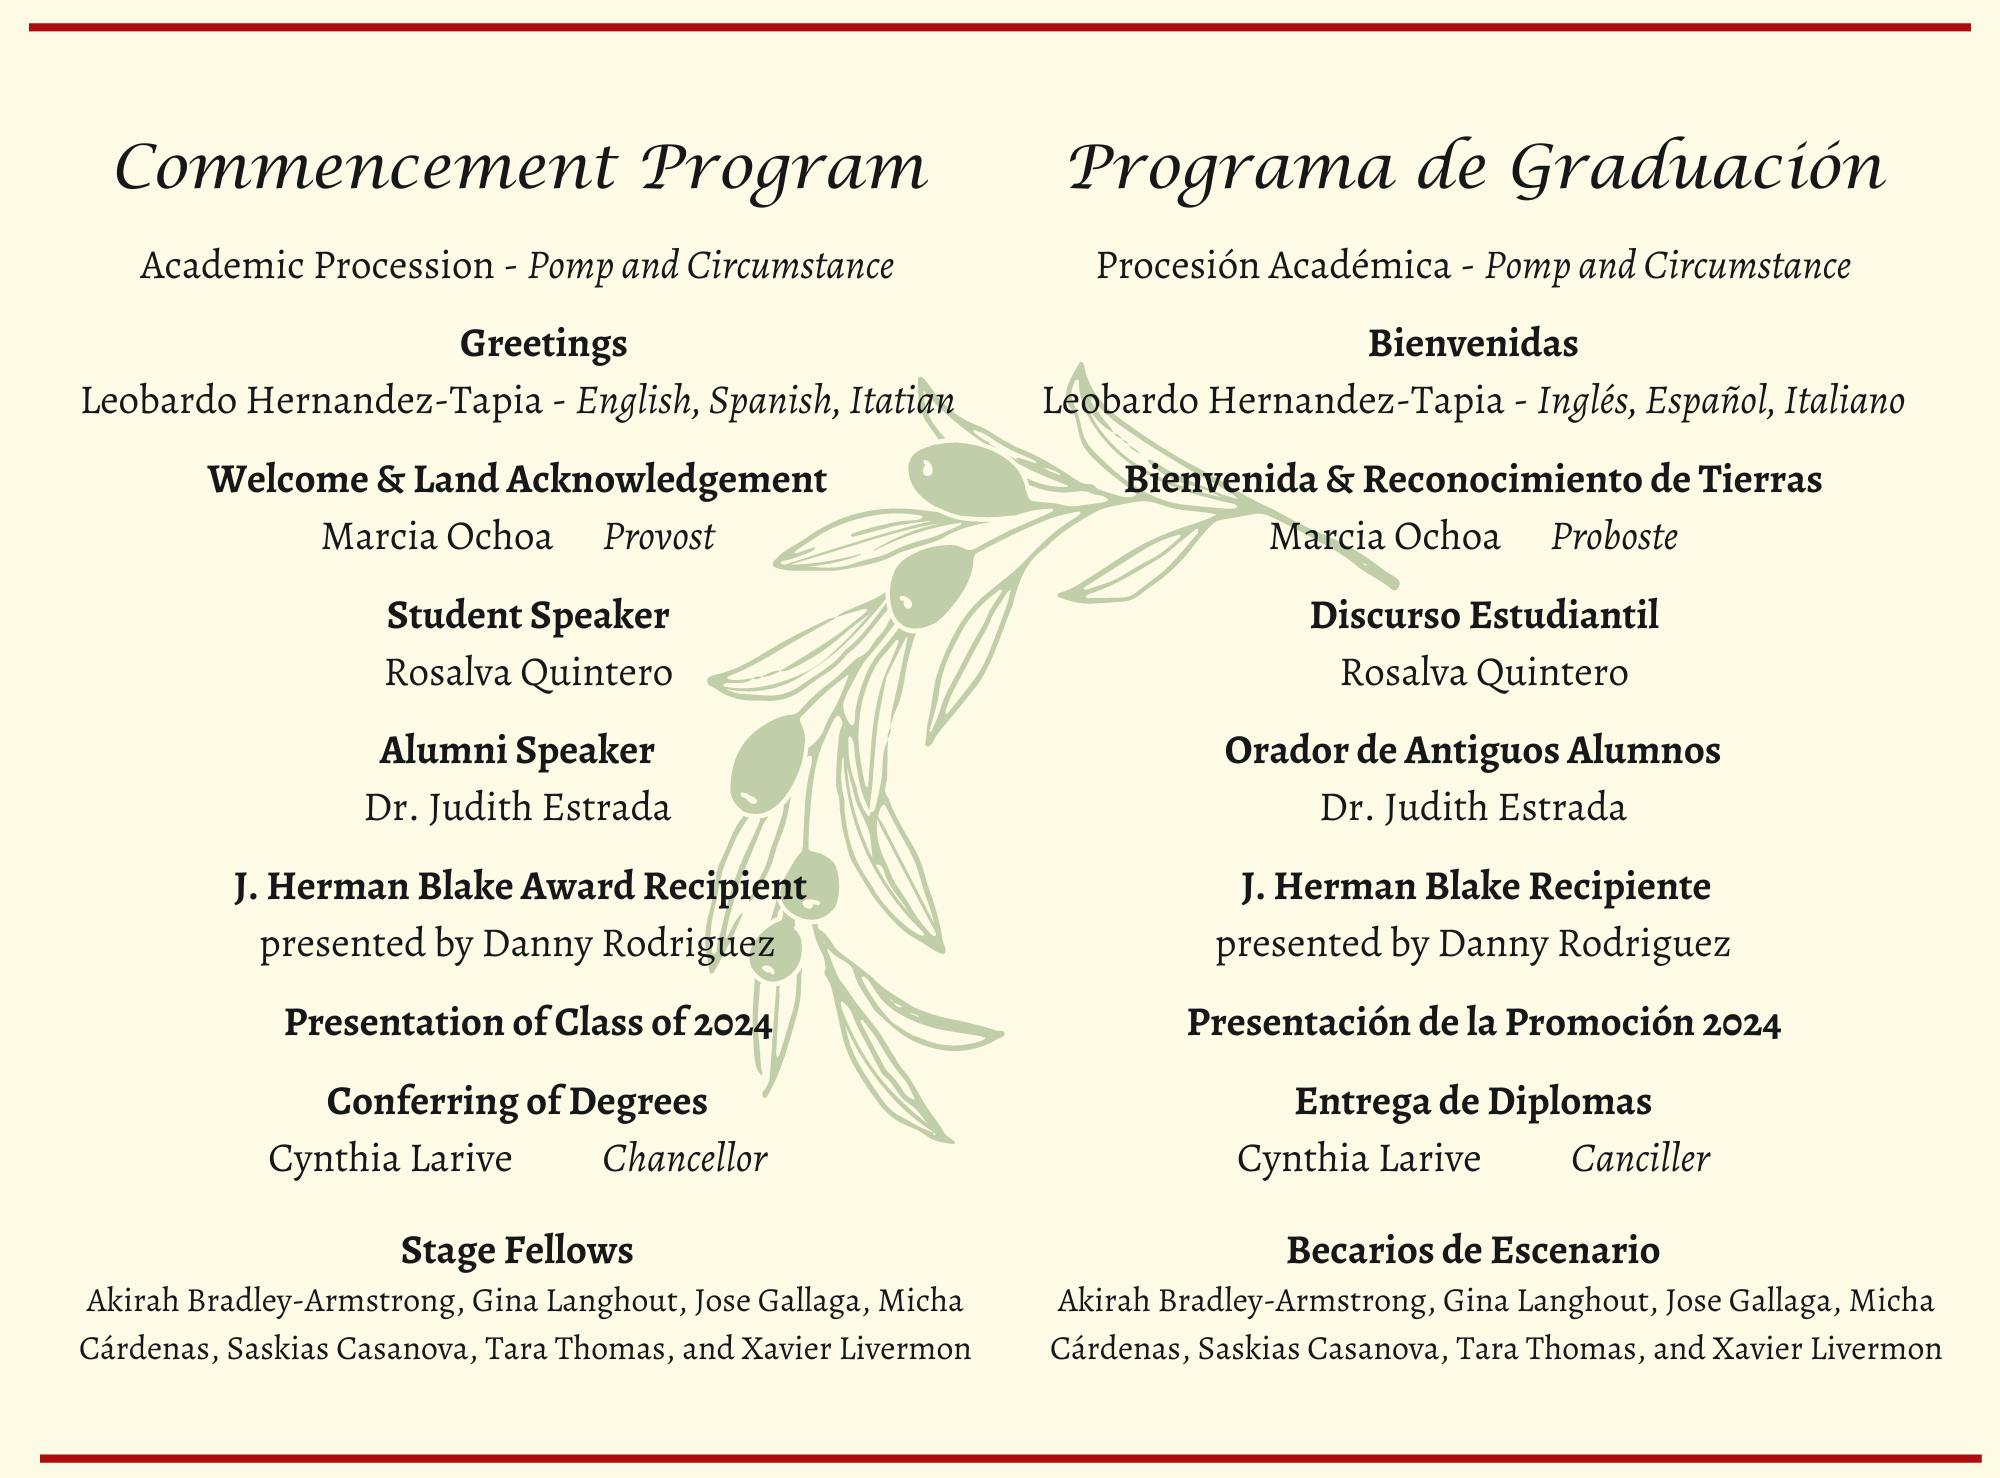 graduation-pamphlet.png